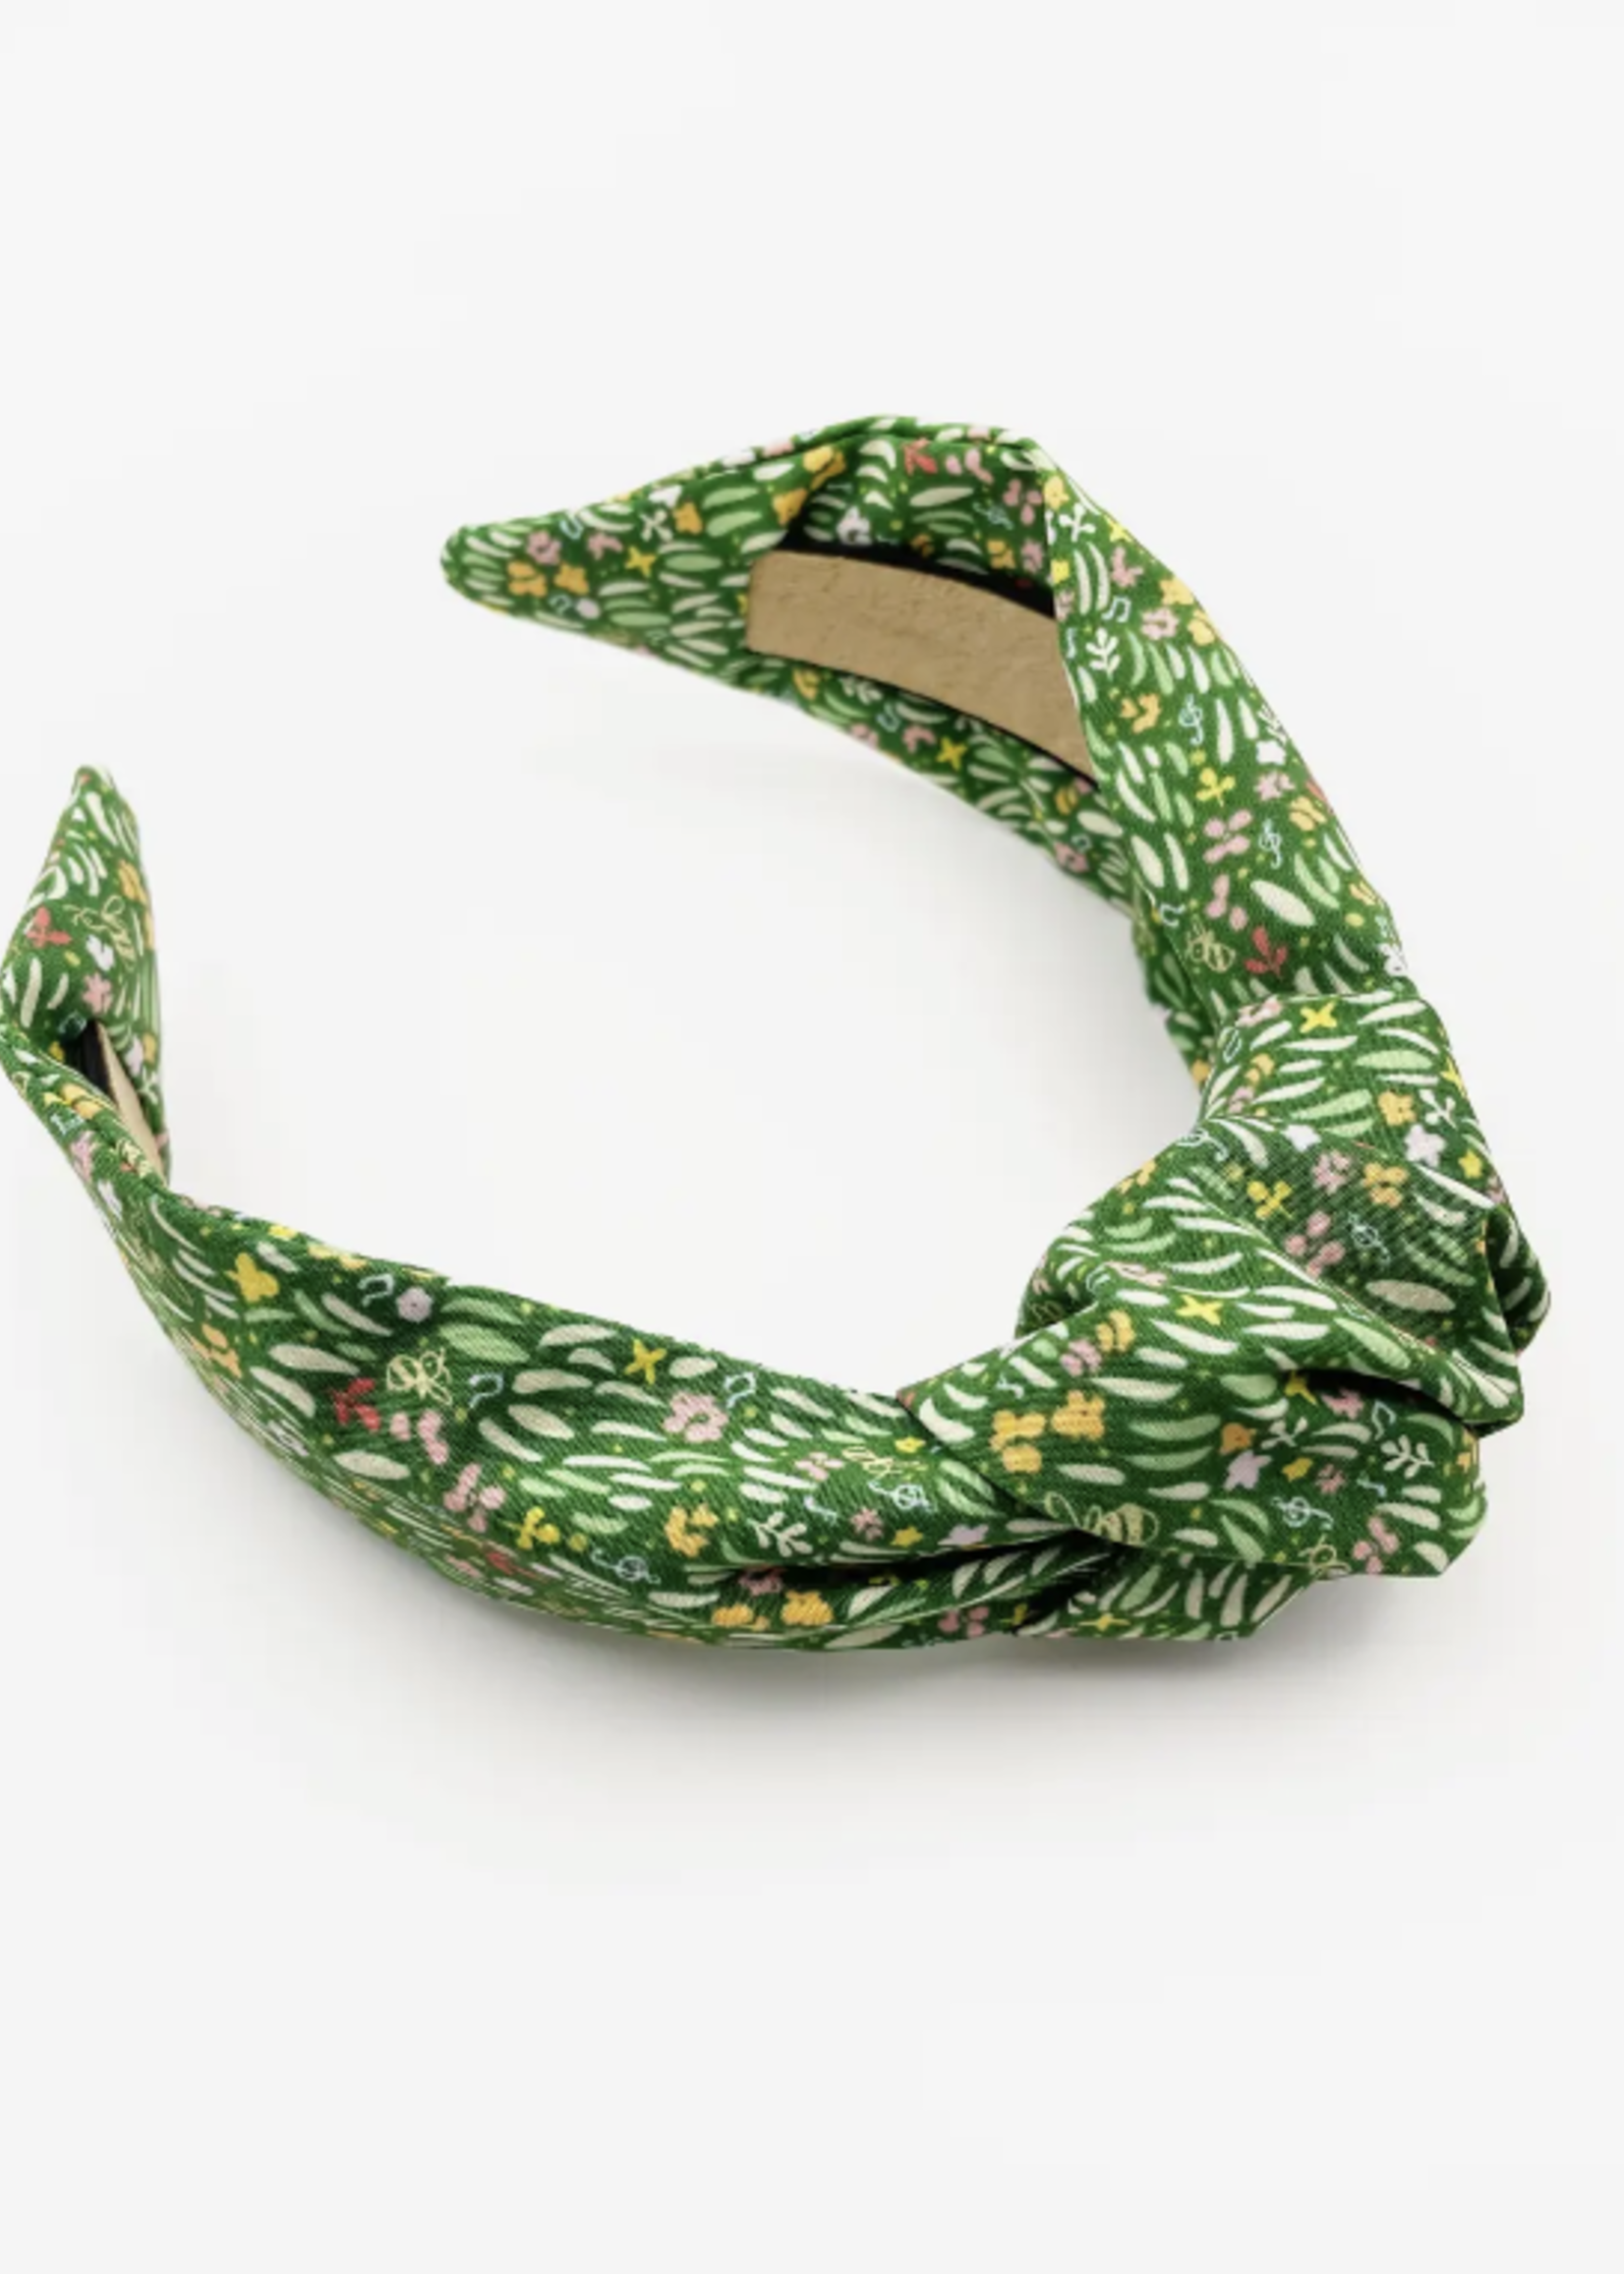 Elitaire Boutique Green Jardin Headband